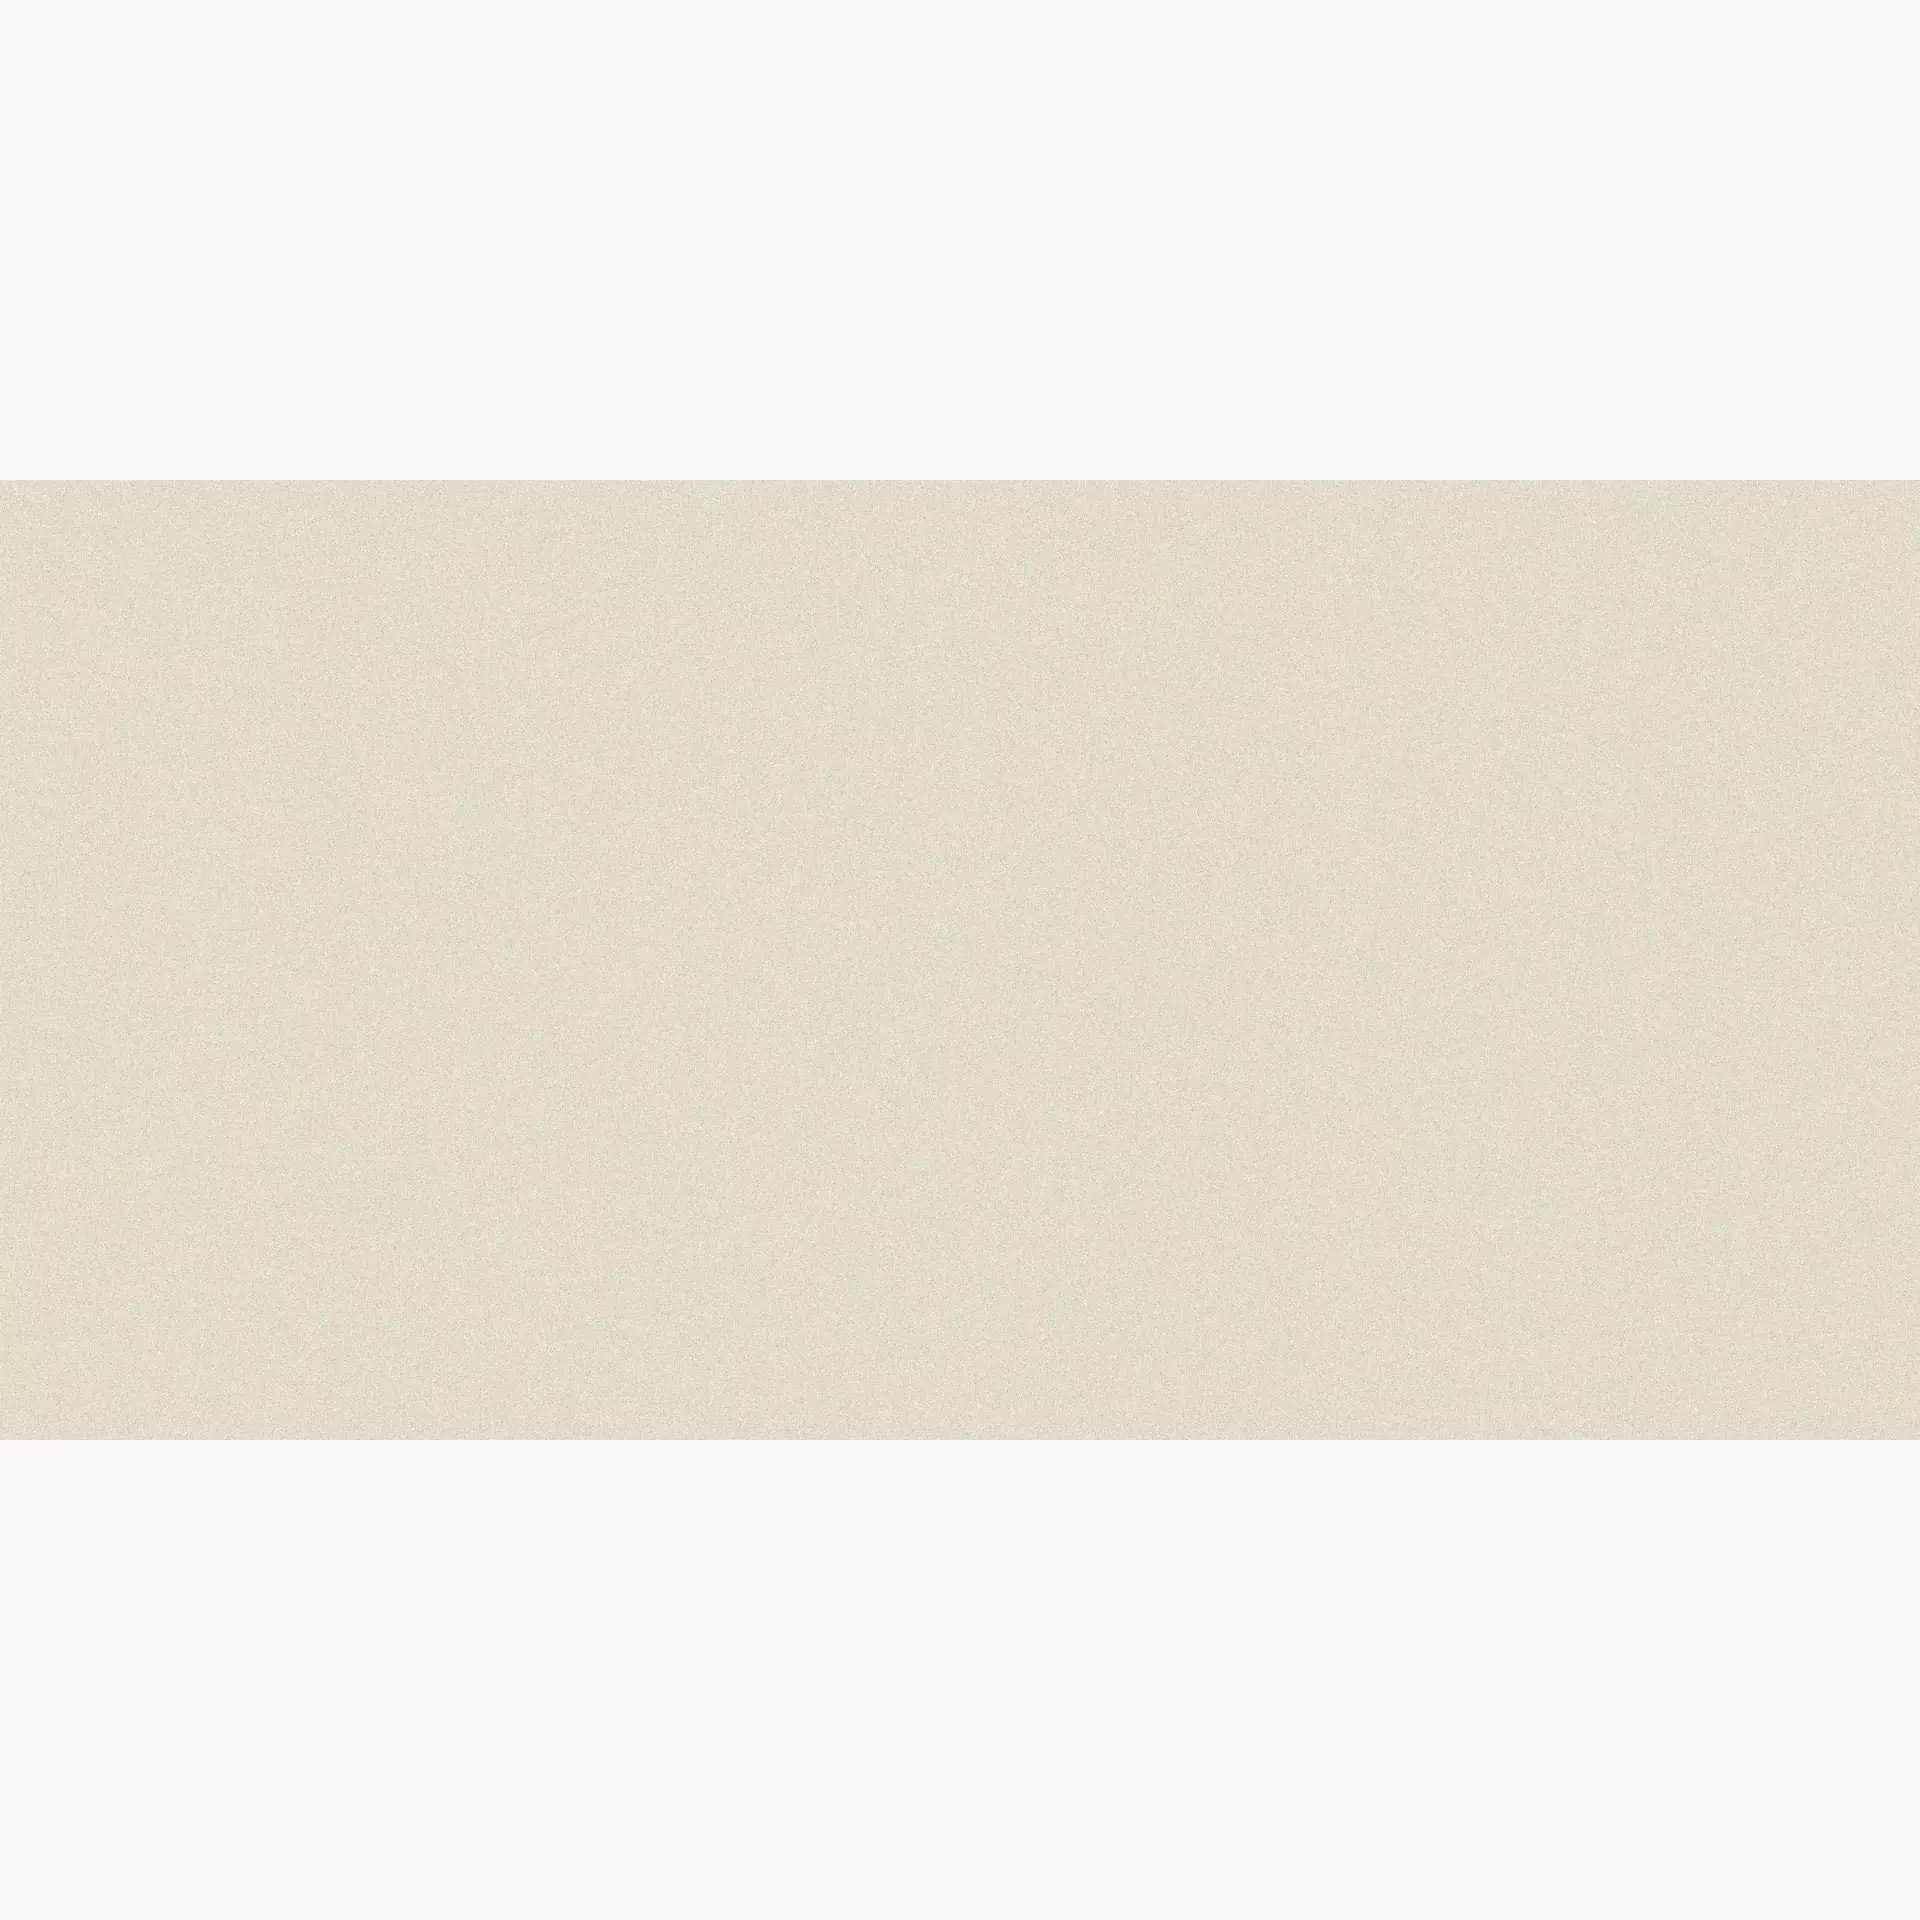 Casalgrande Architecture Light Ivory Naturale – Matt – Antibacterial 4795753 30x60cm rectified 9,4mm